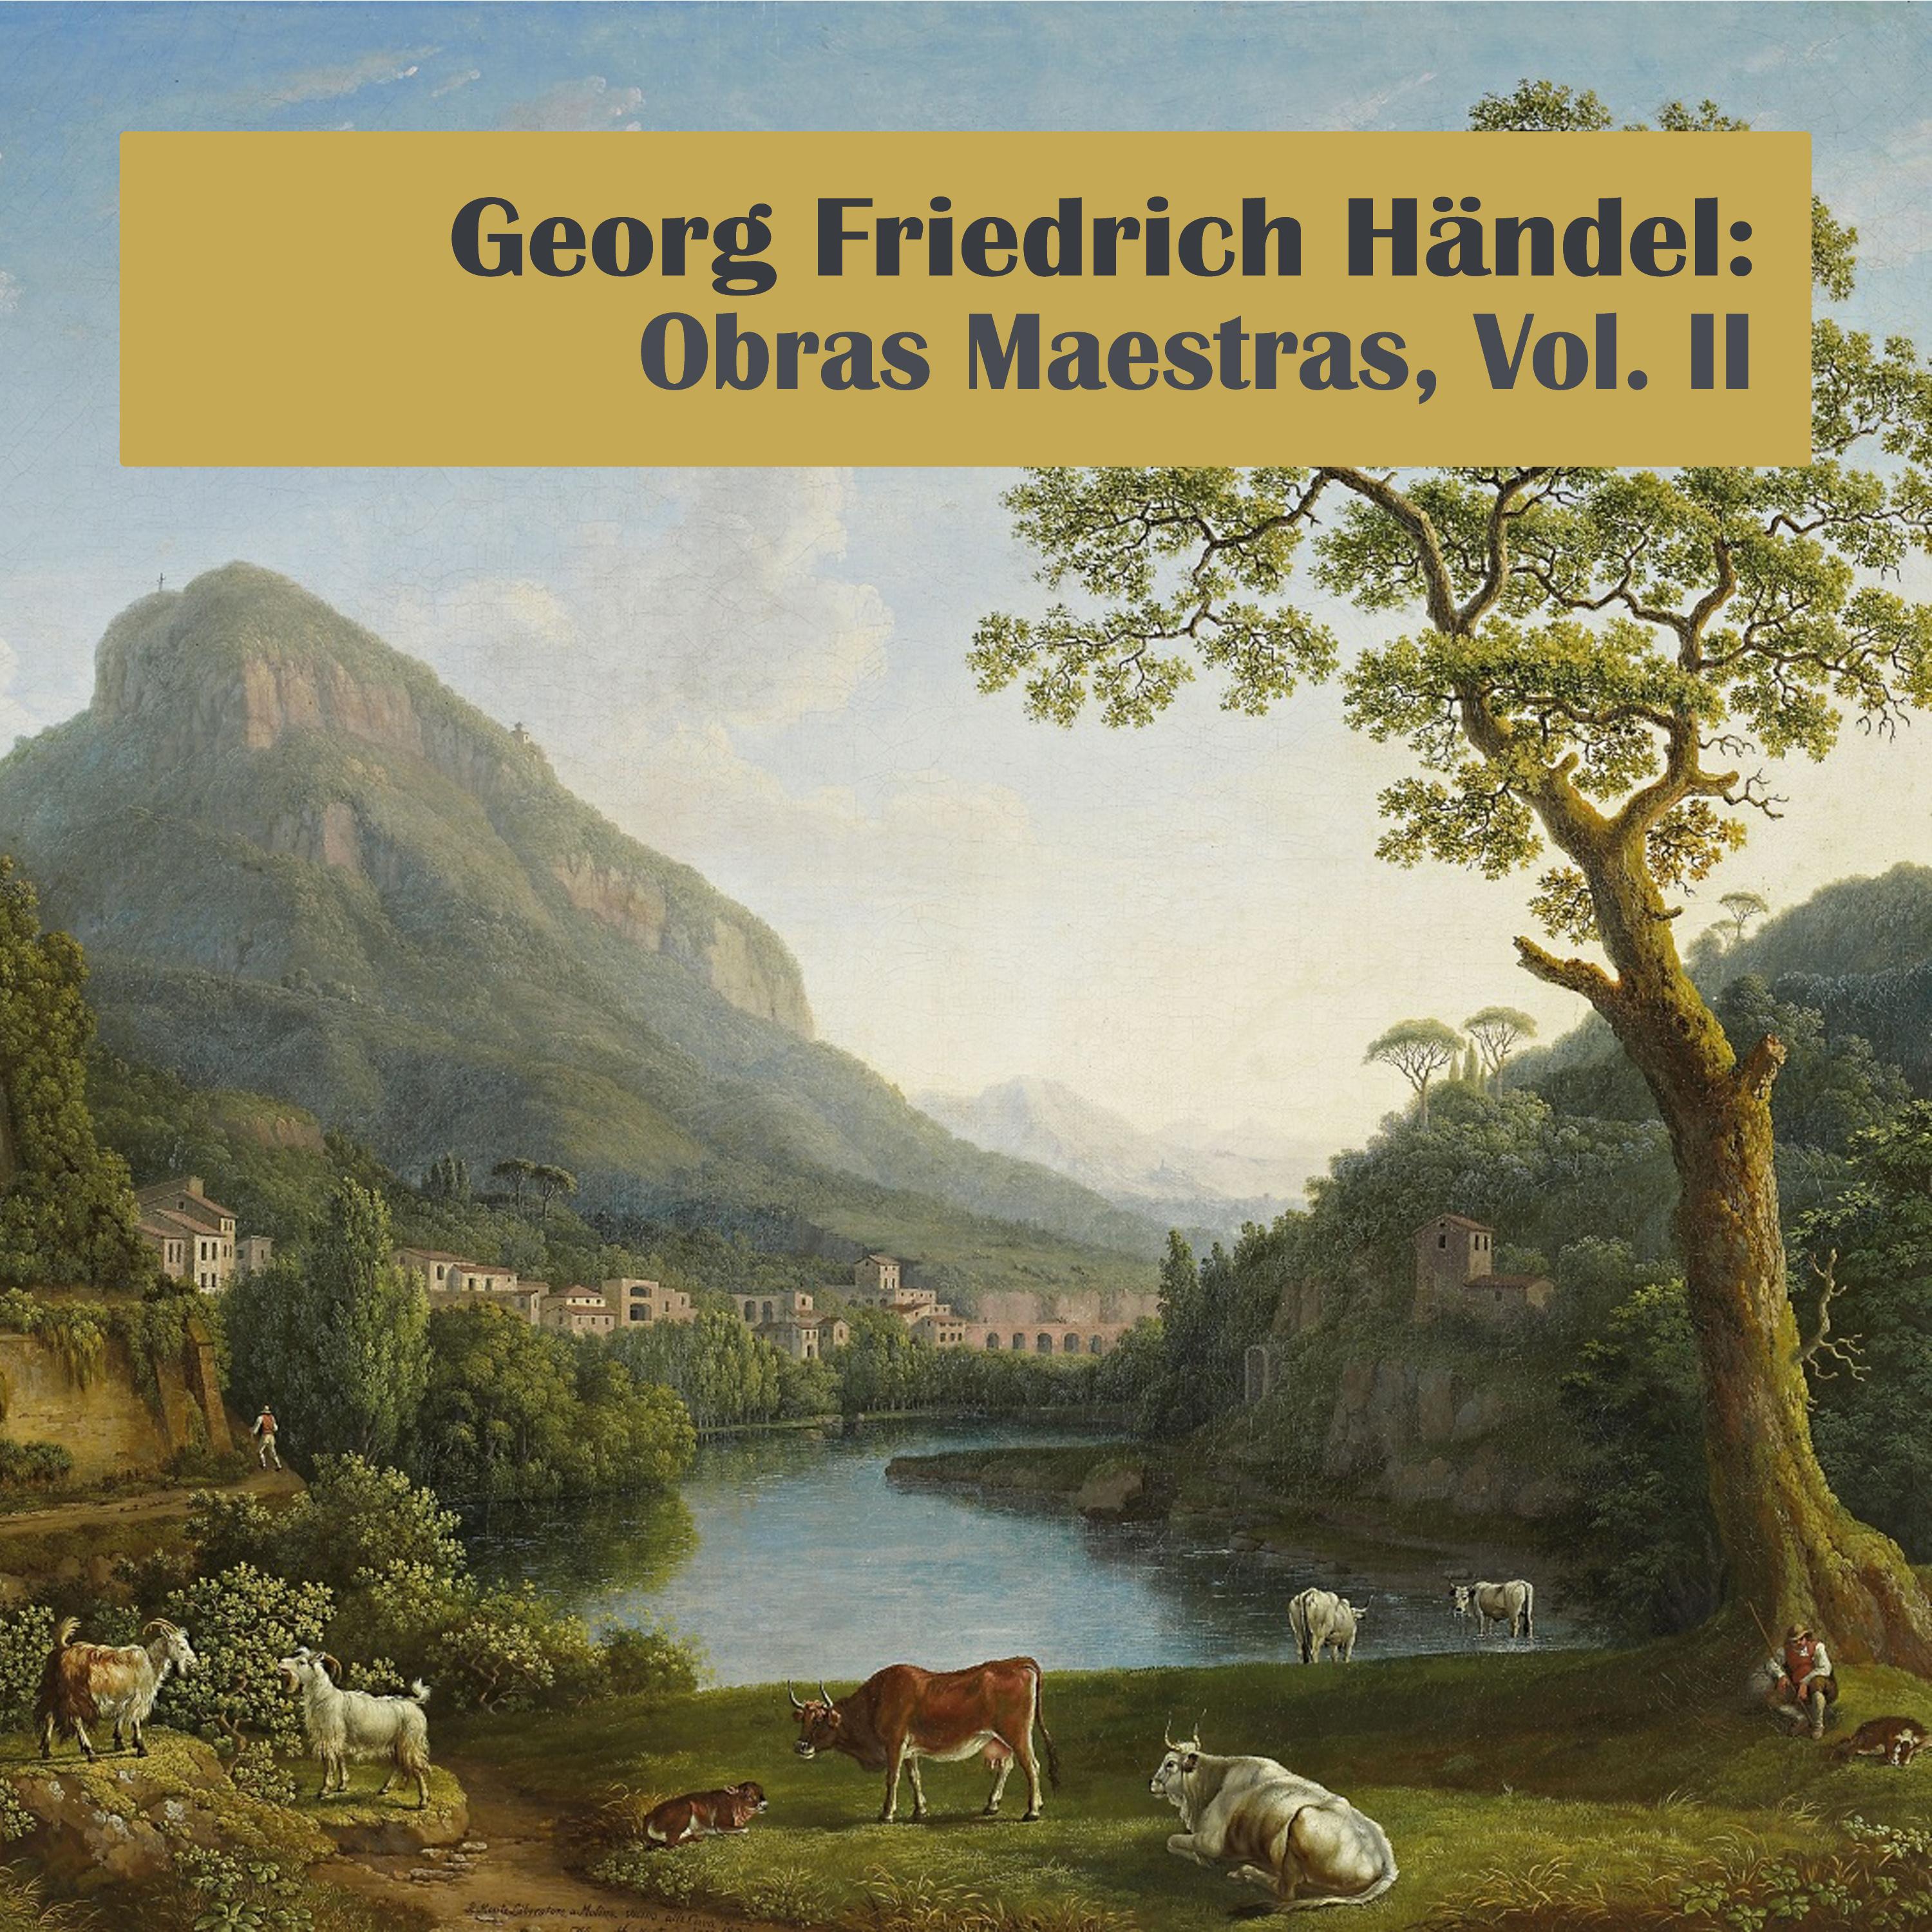 Georg Friedrich Händel: Obras Maestras, Vol. II